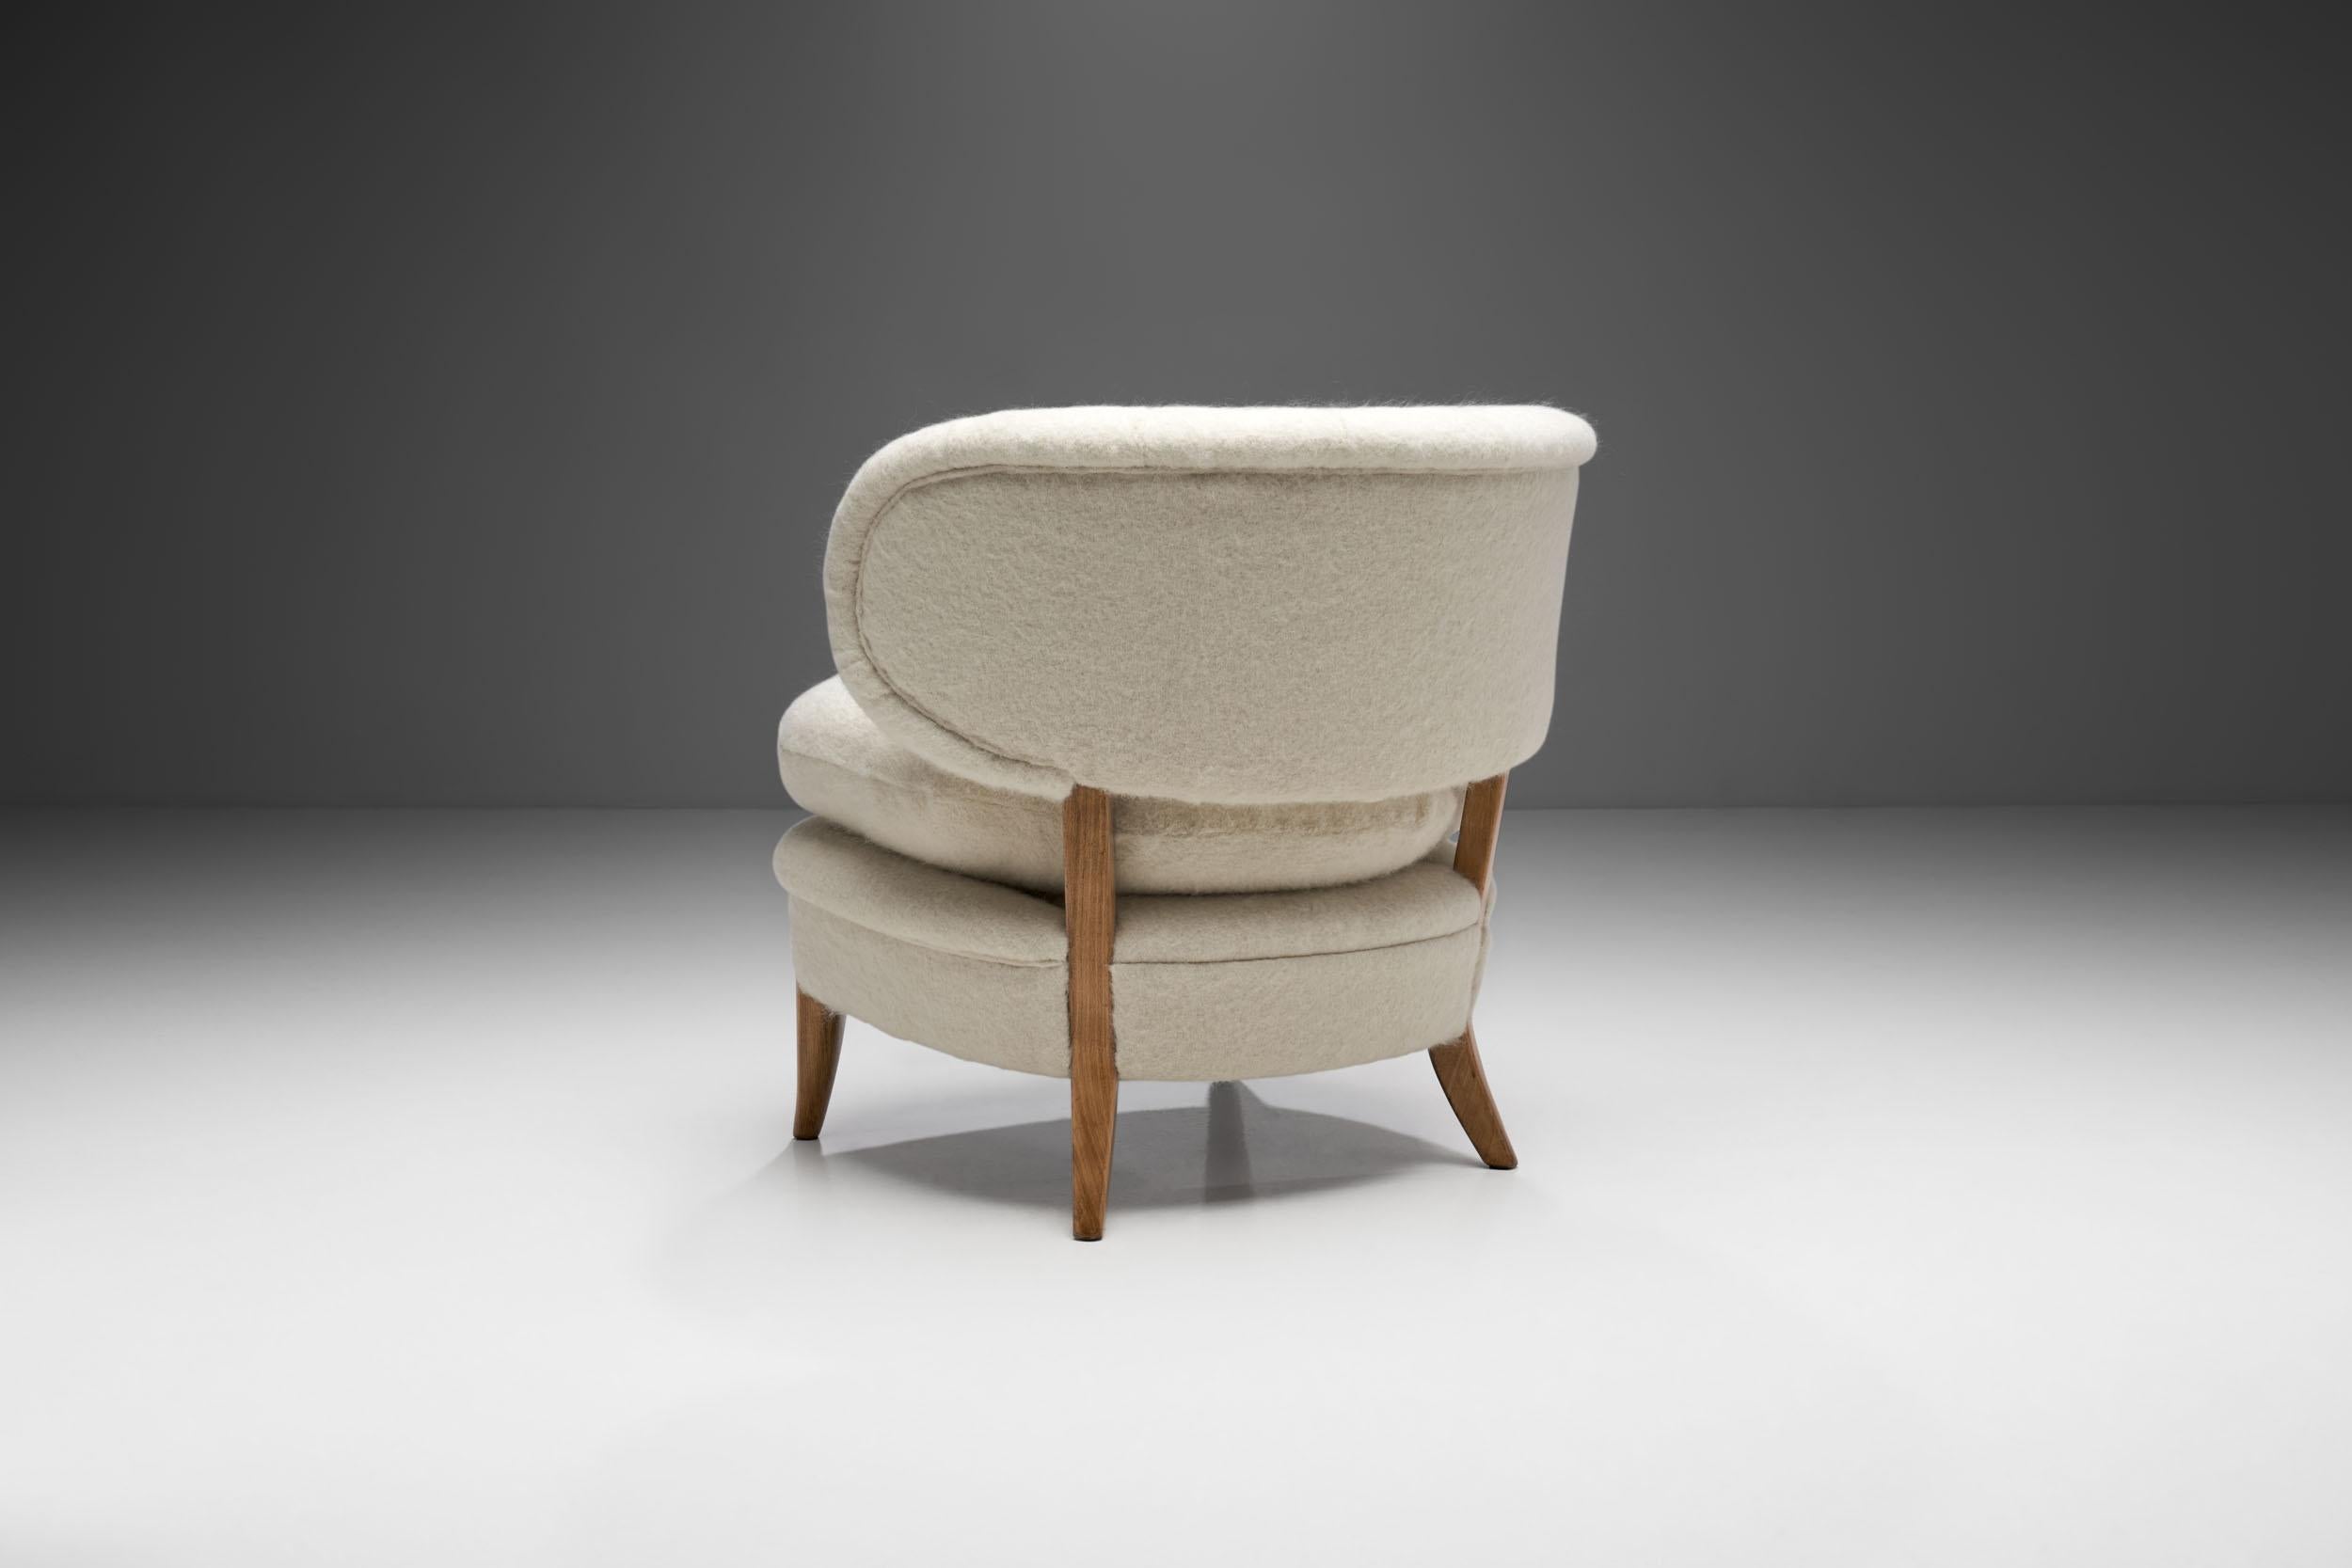 Mid-20th Century “Schulz” Lounge Chair by Otto Schulz for Jio Möbler Jönköping, Sweden 1940s